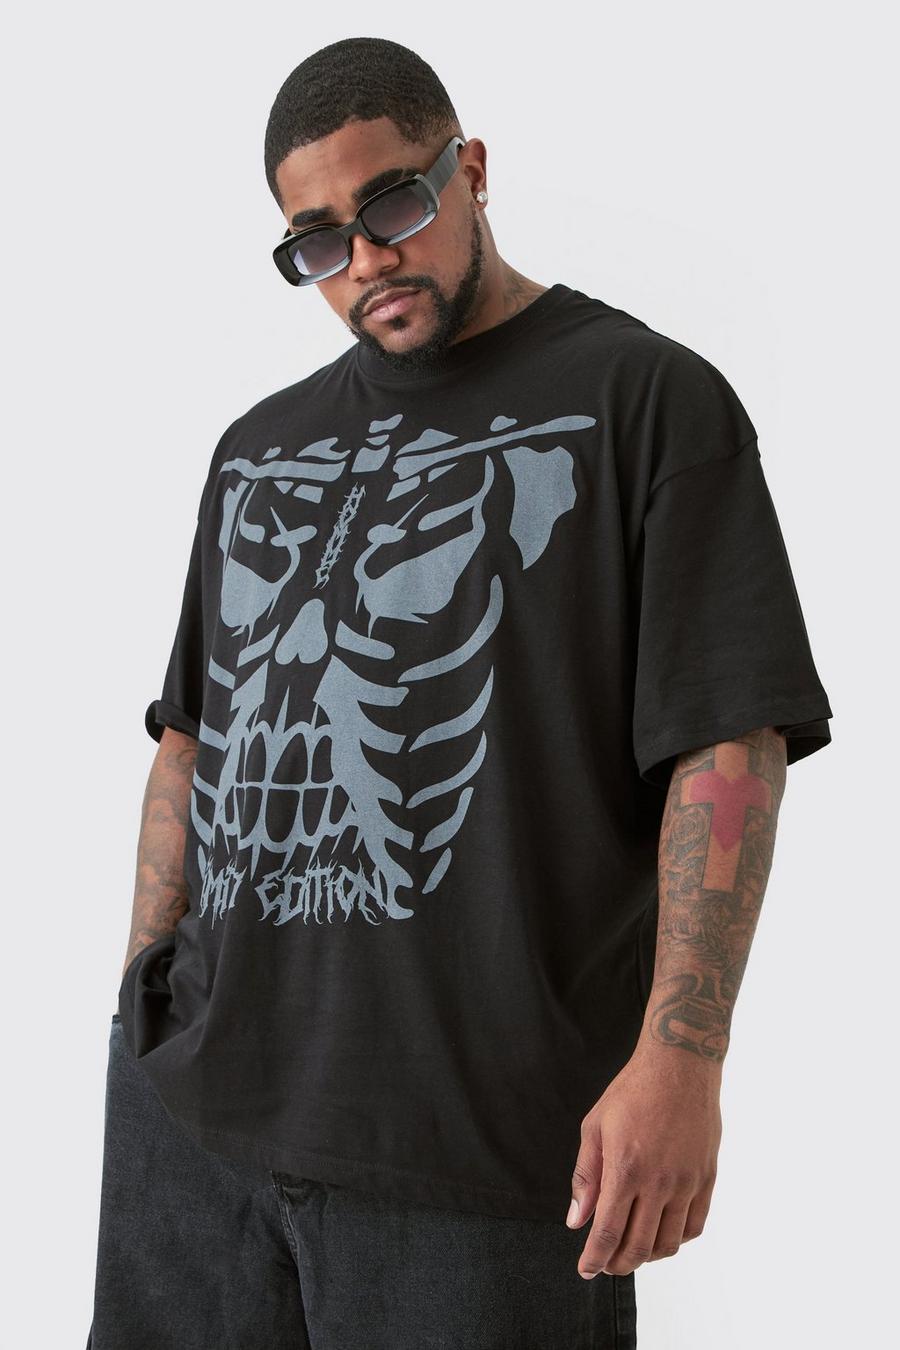 Camiseta Plus negra con estampado gráfico de esqueleto, Black